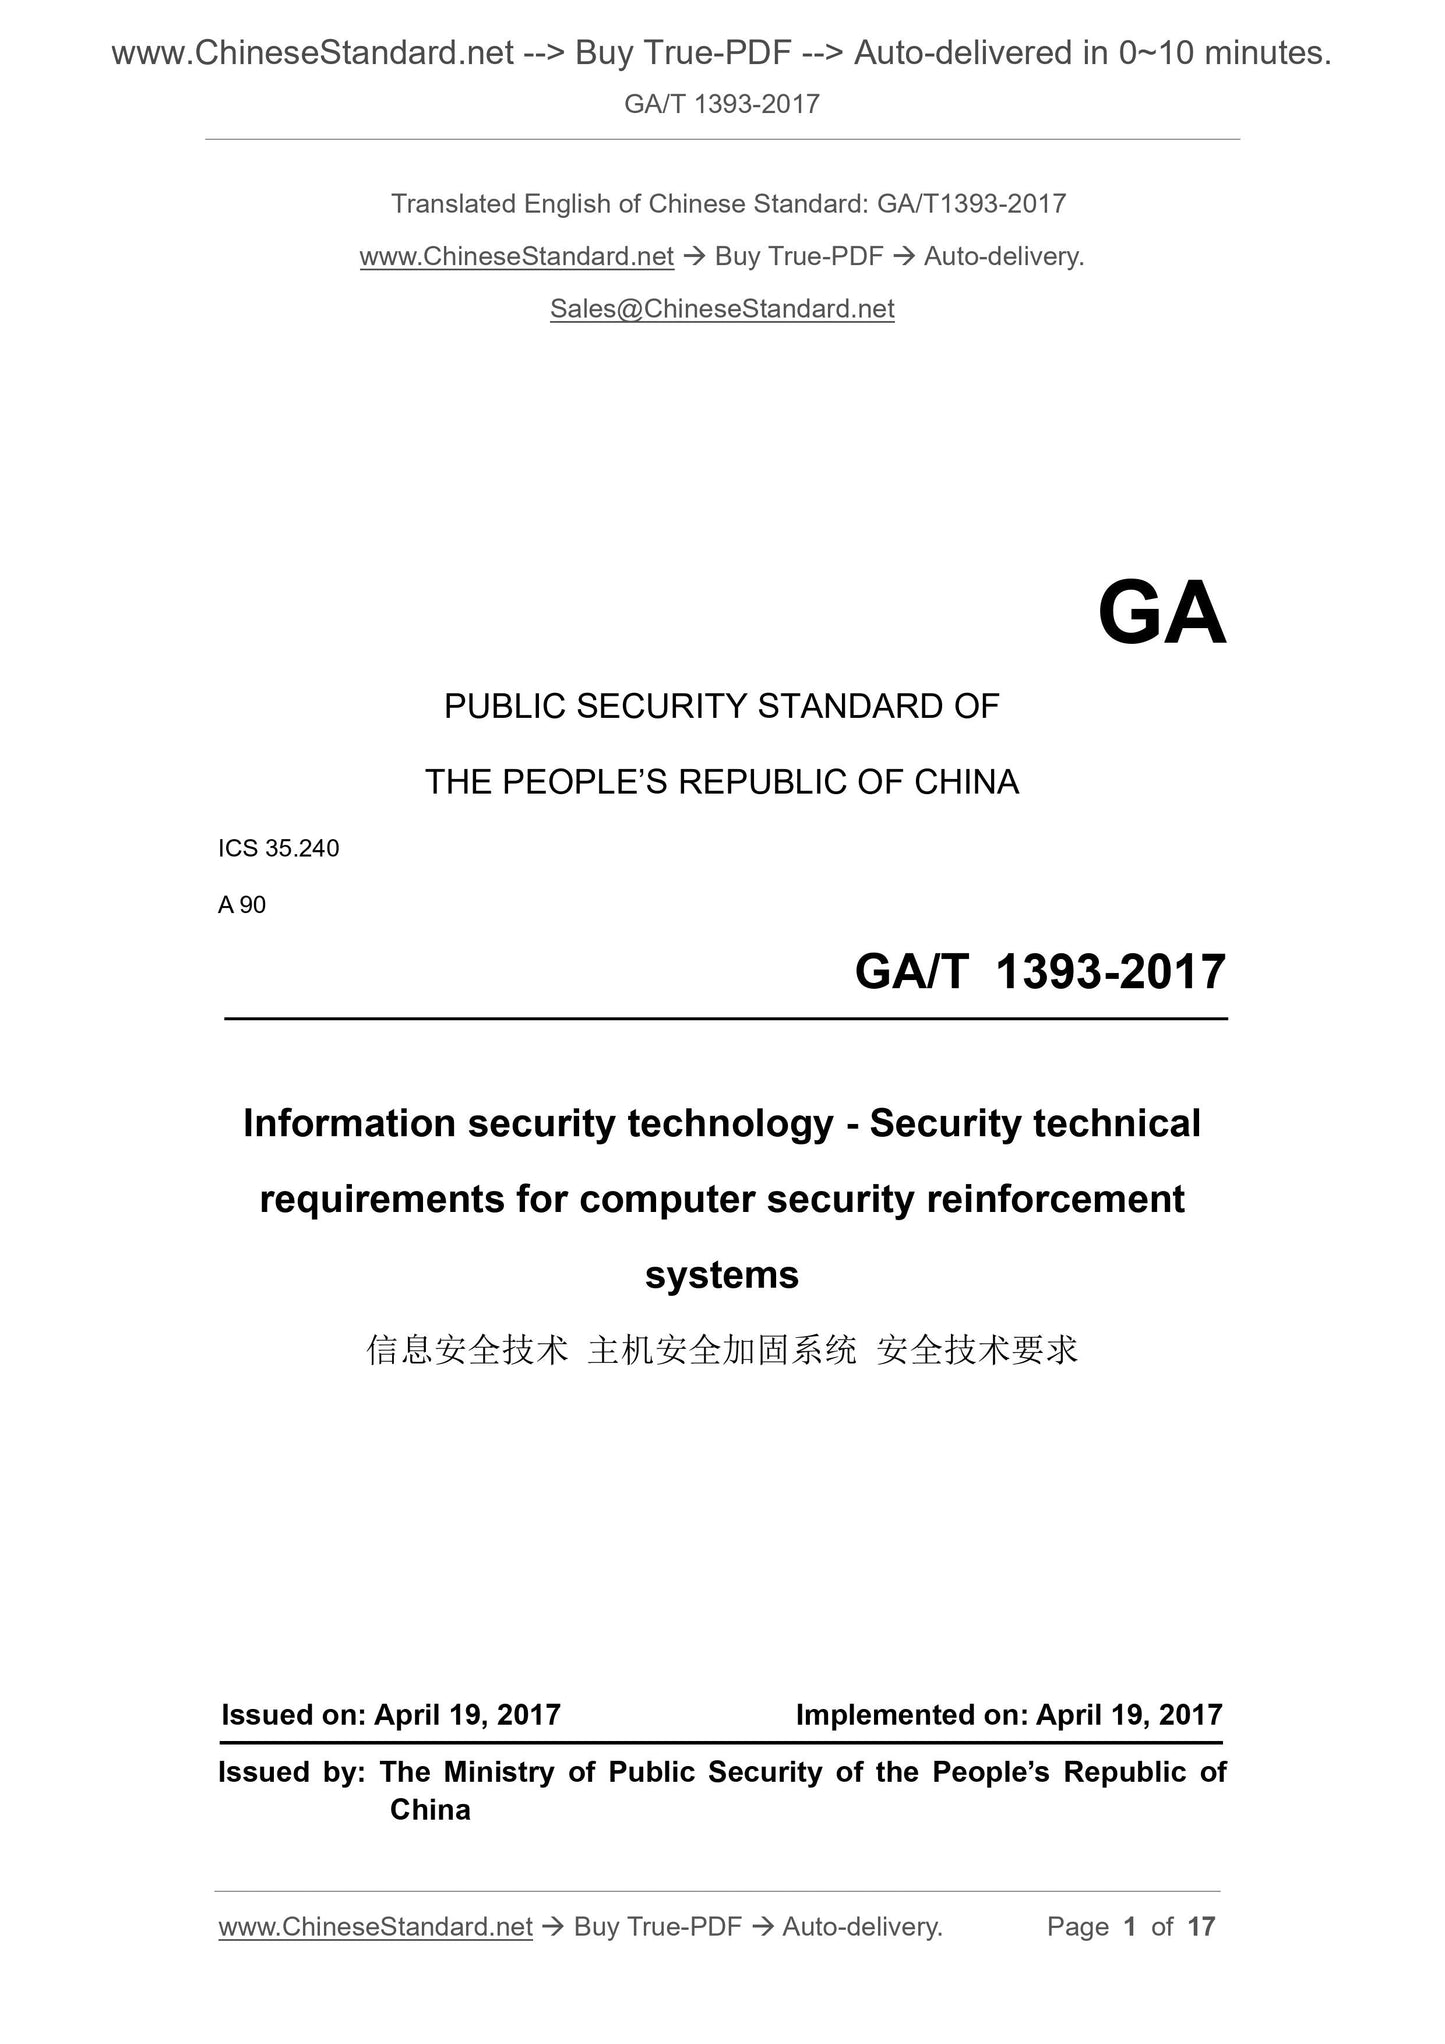 GA/T 1393-2017 Page 1